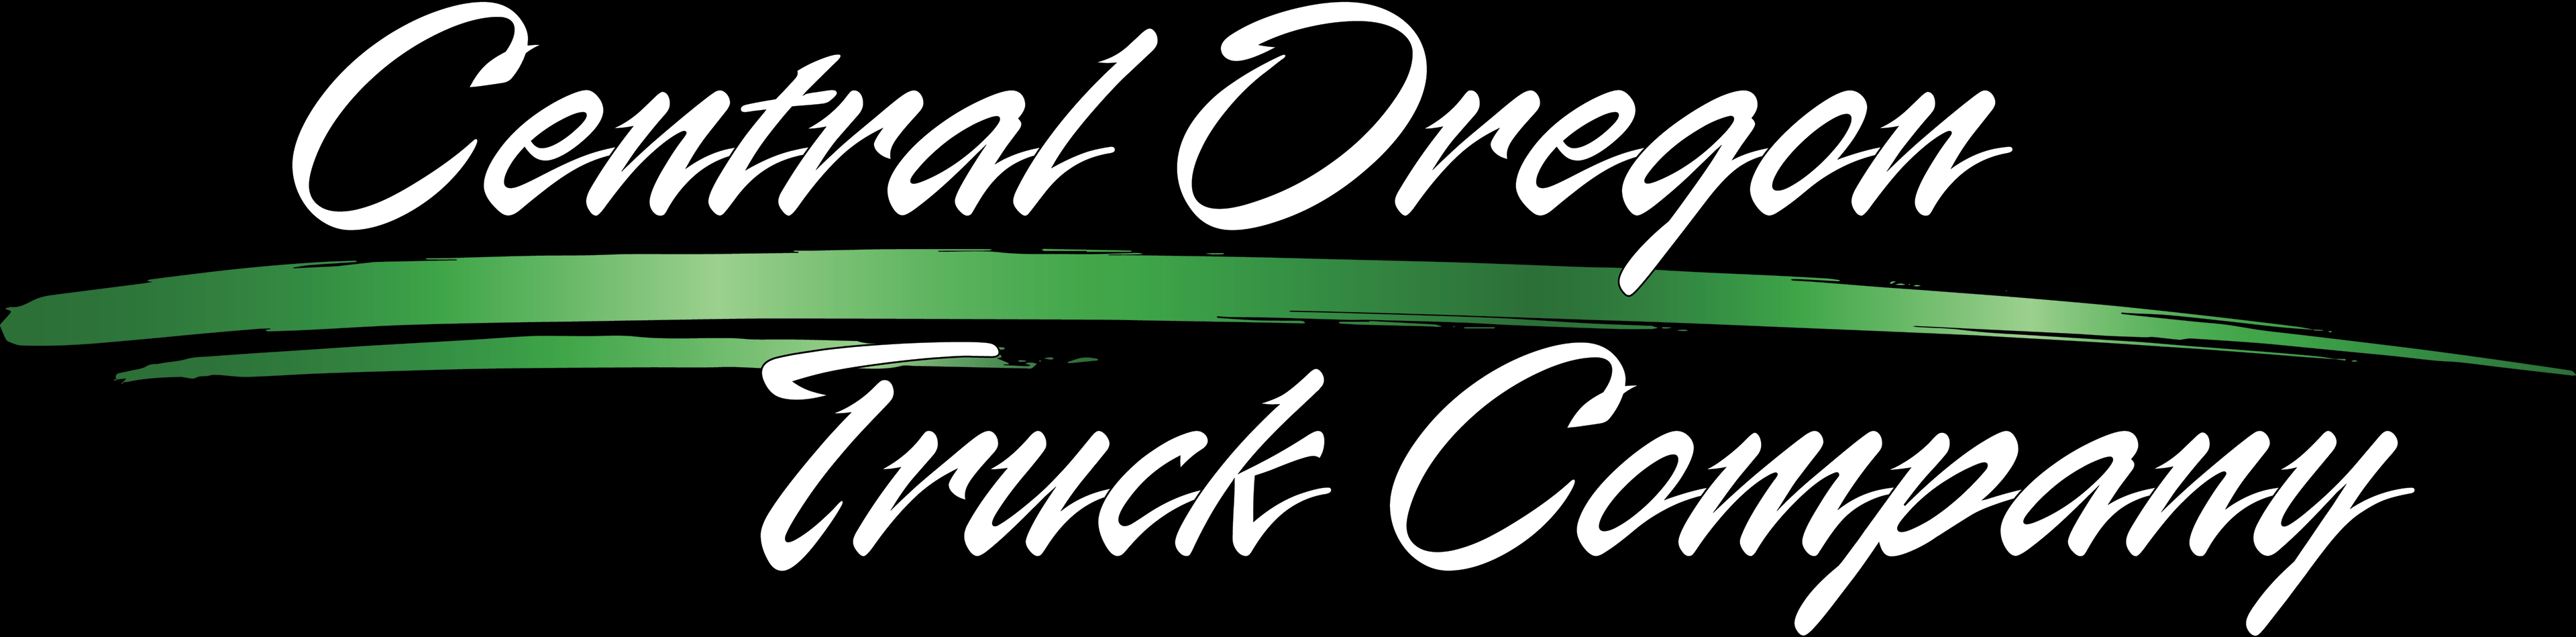 Central Oregon Truck Company Company Logo